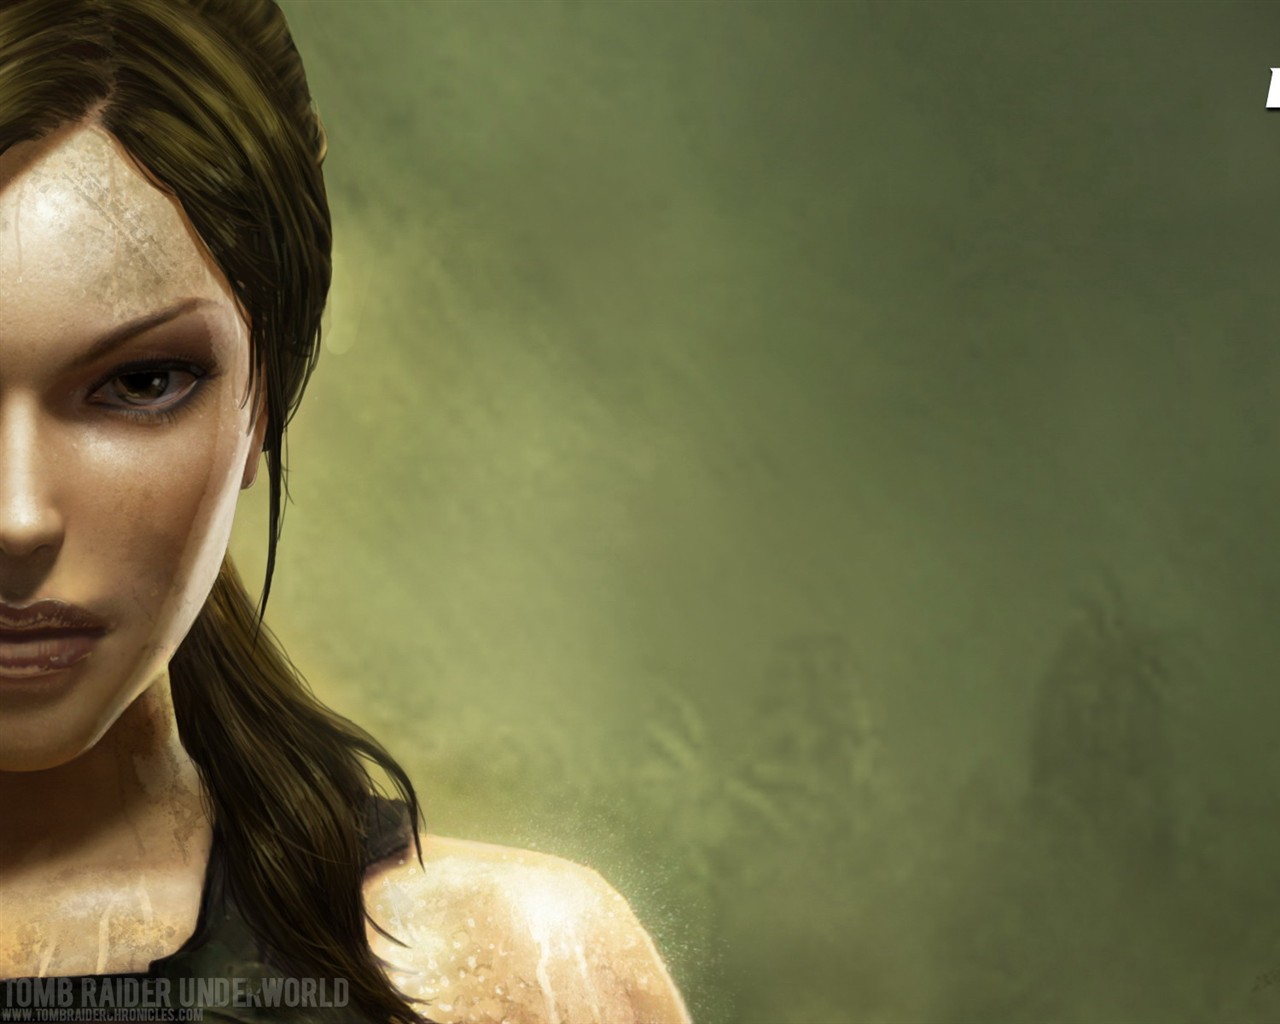 Lara Croft Tomb Raider 8 Underworld #8 - 1280x1024